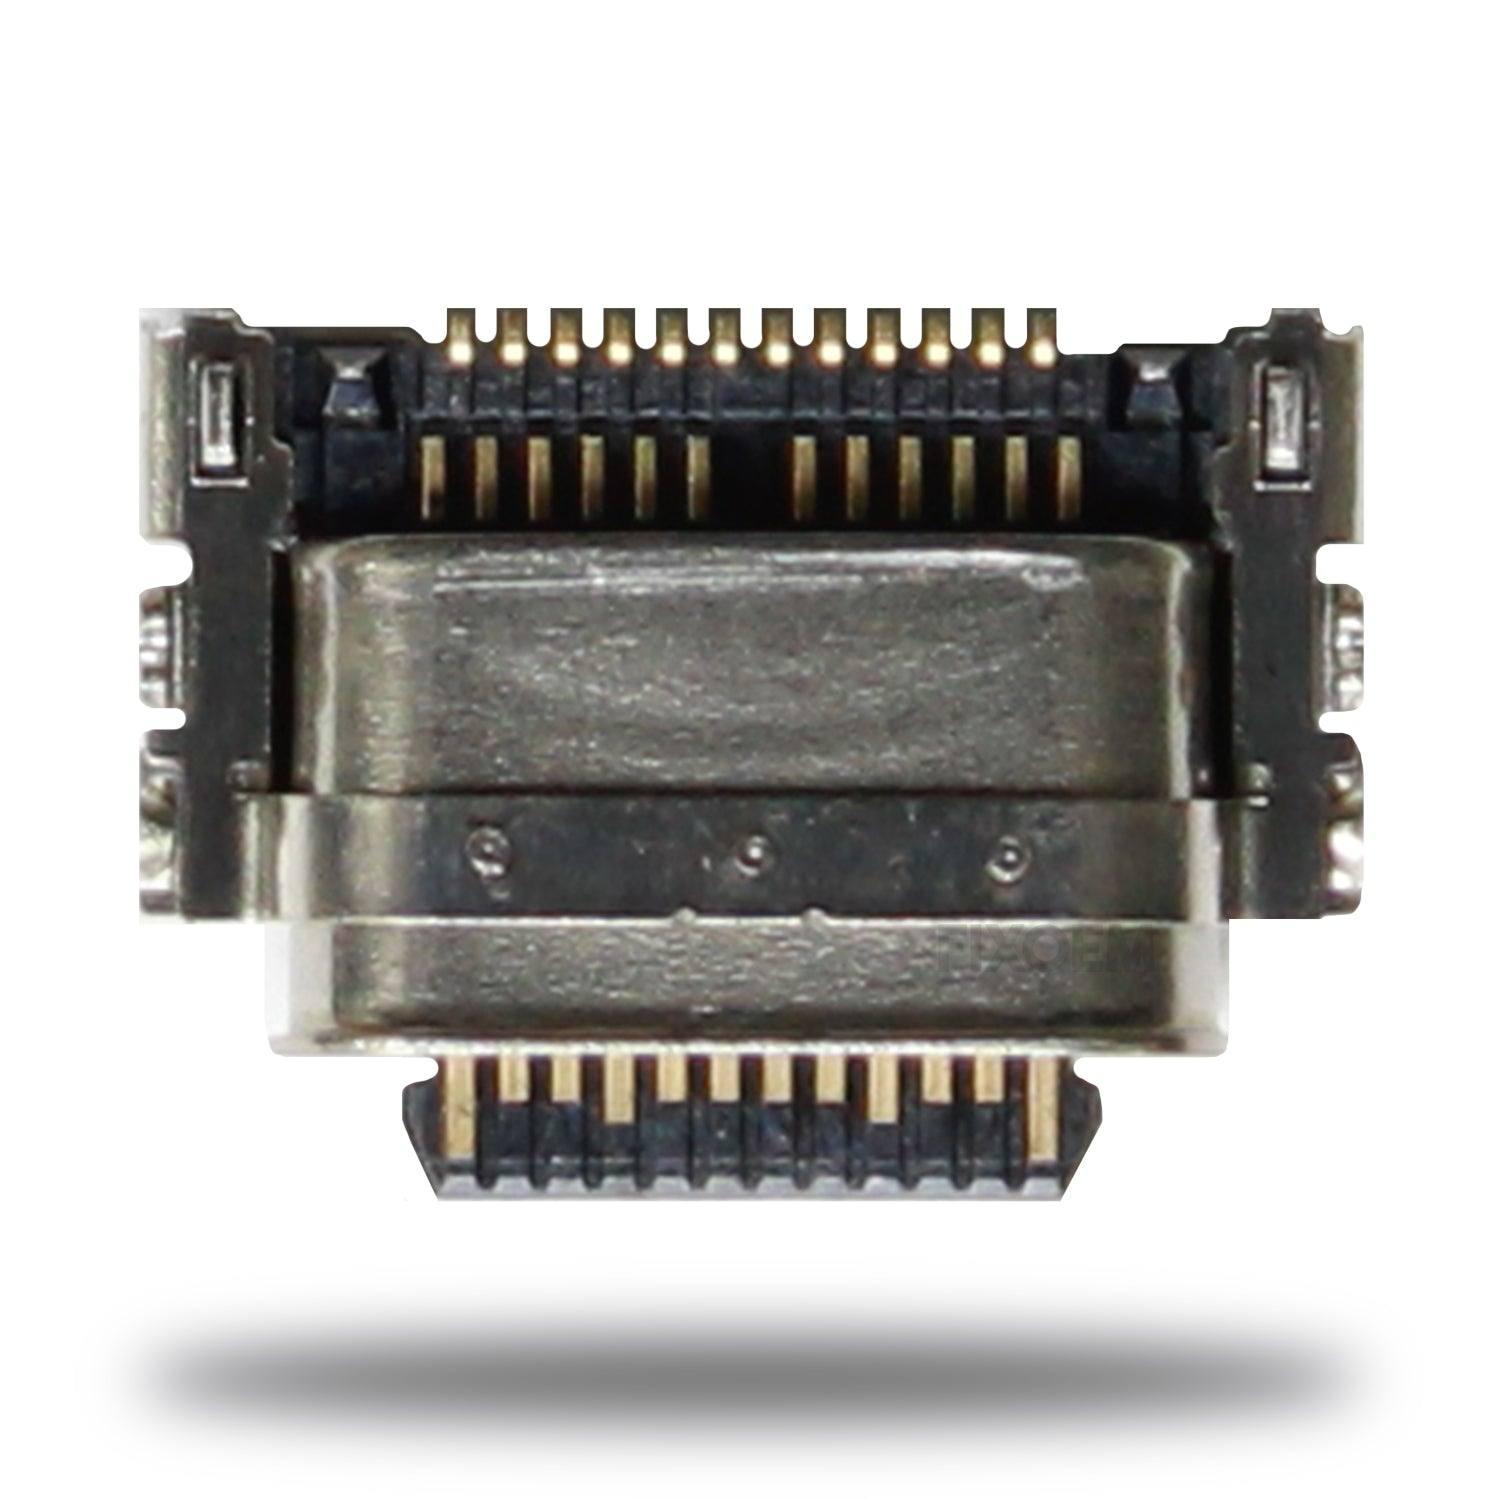 Pin Carga Lg Q7 / Q7 Plus Q710 a solo $ 40.00 Refaccion y puestos celulares, refurbish y microelectronica.- FixOEM